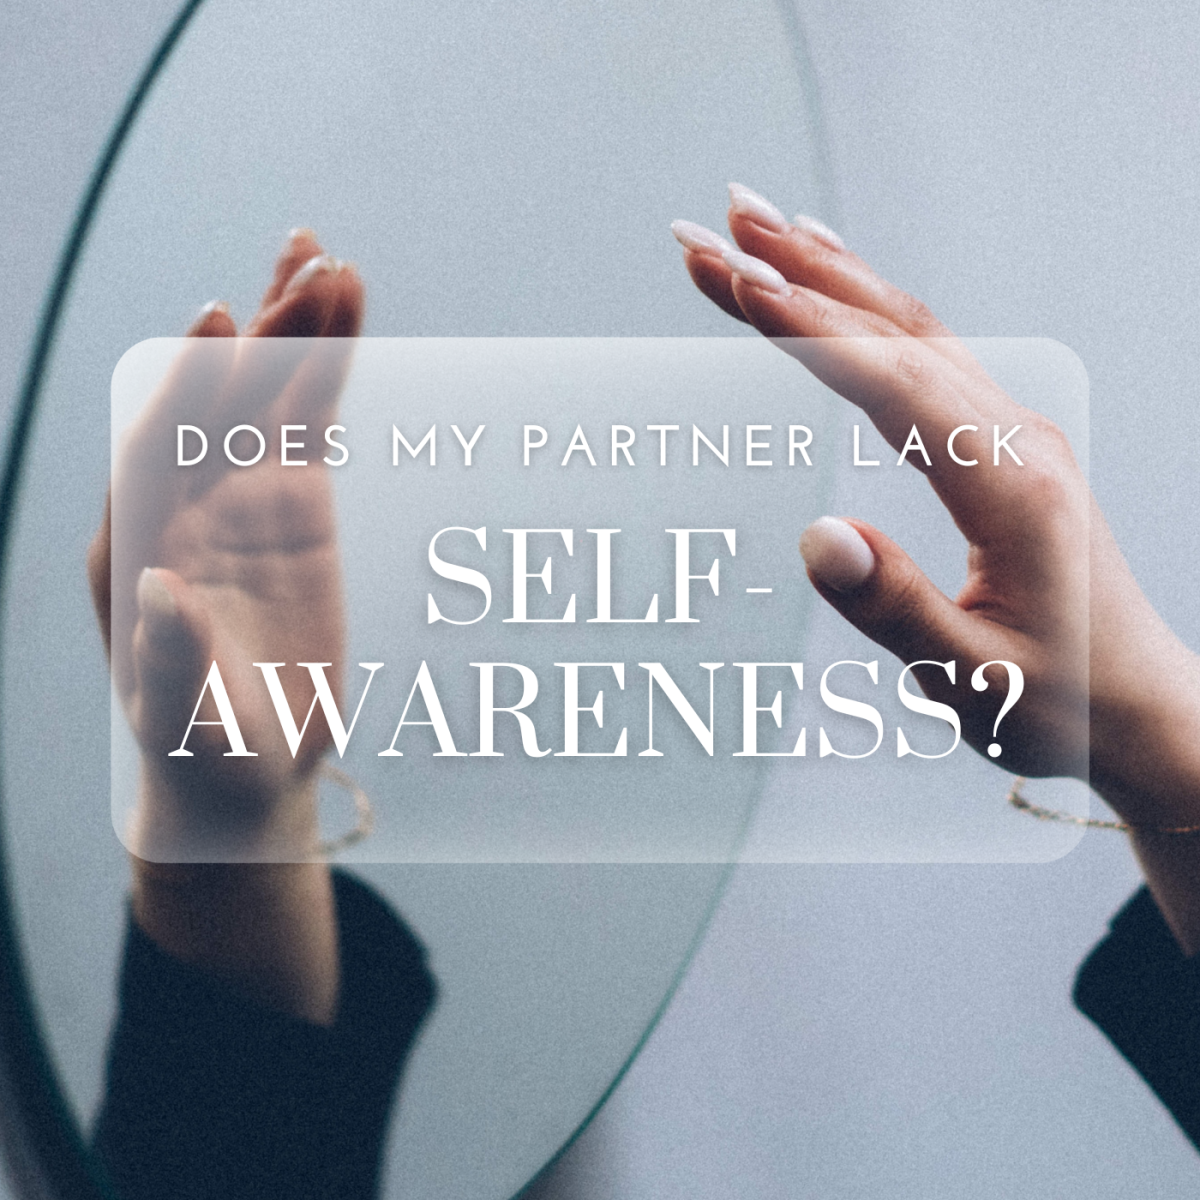 Relationship Red Flag: Does Your Partner Lack Self-Awareness?